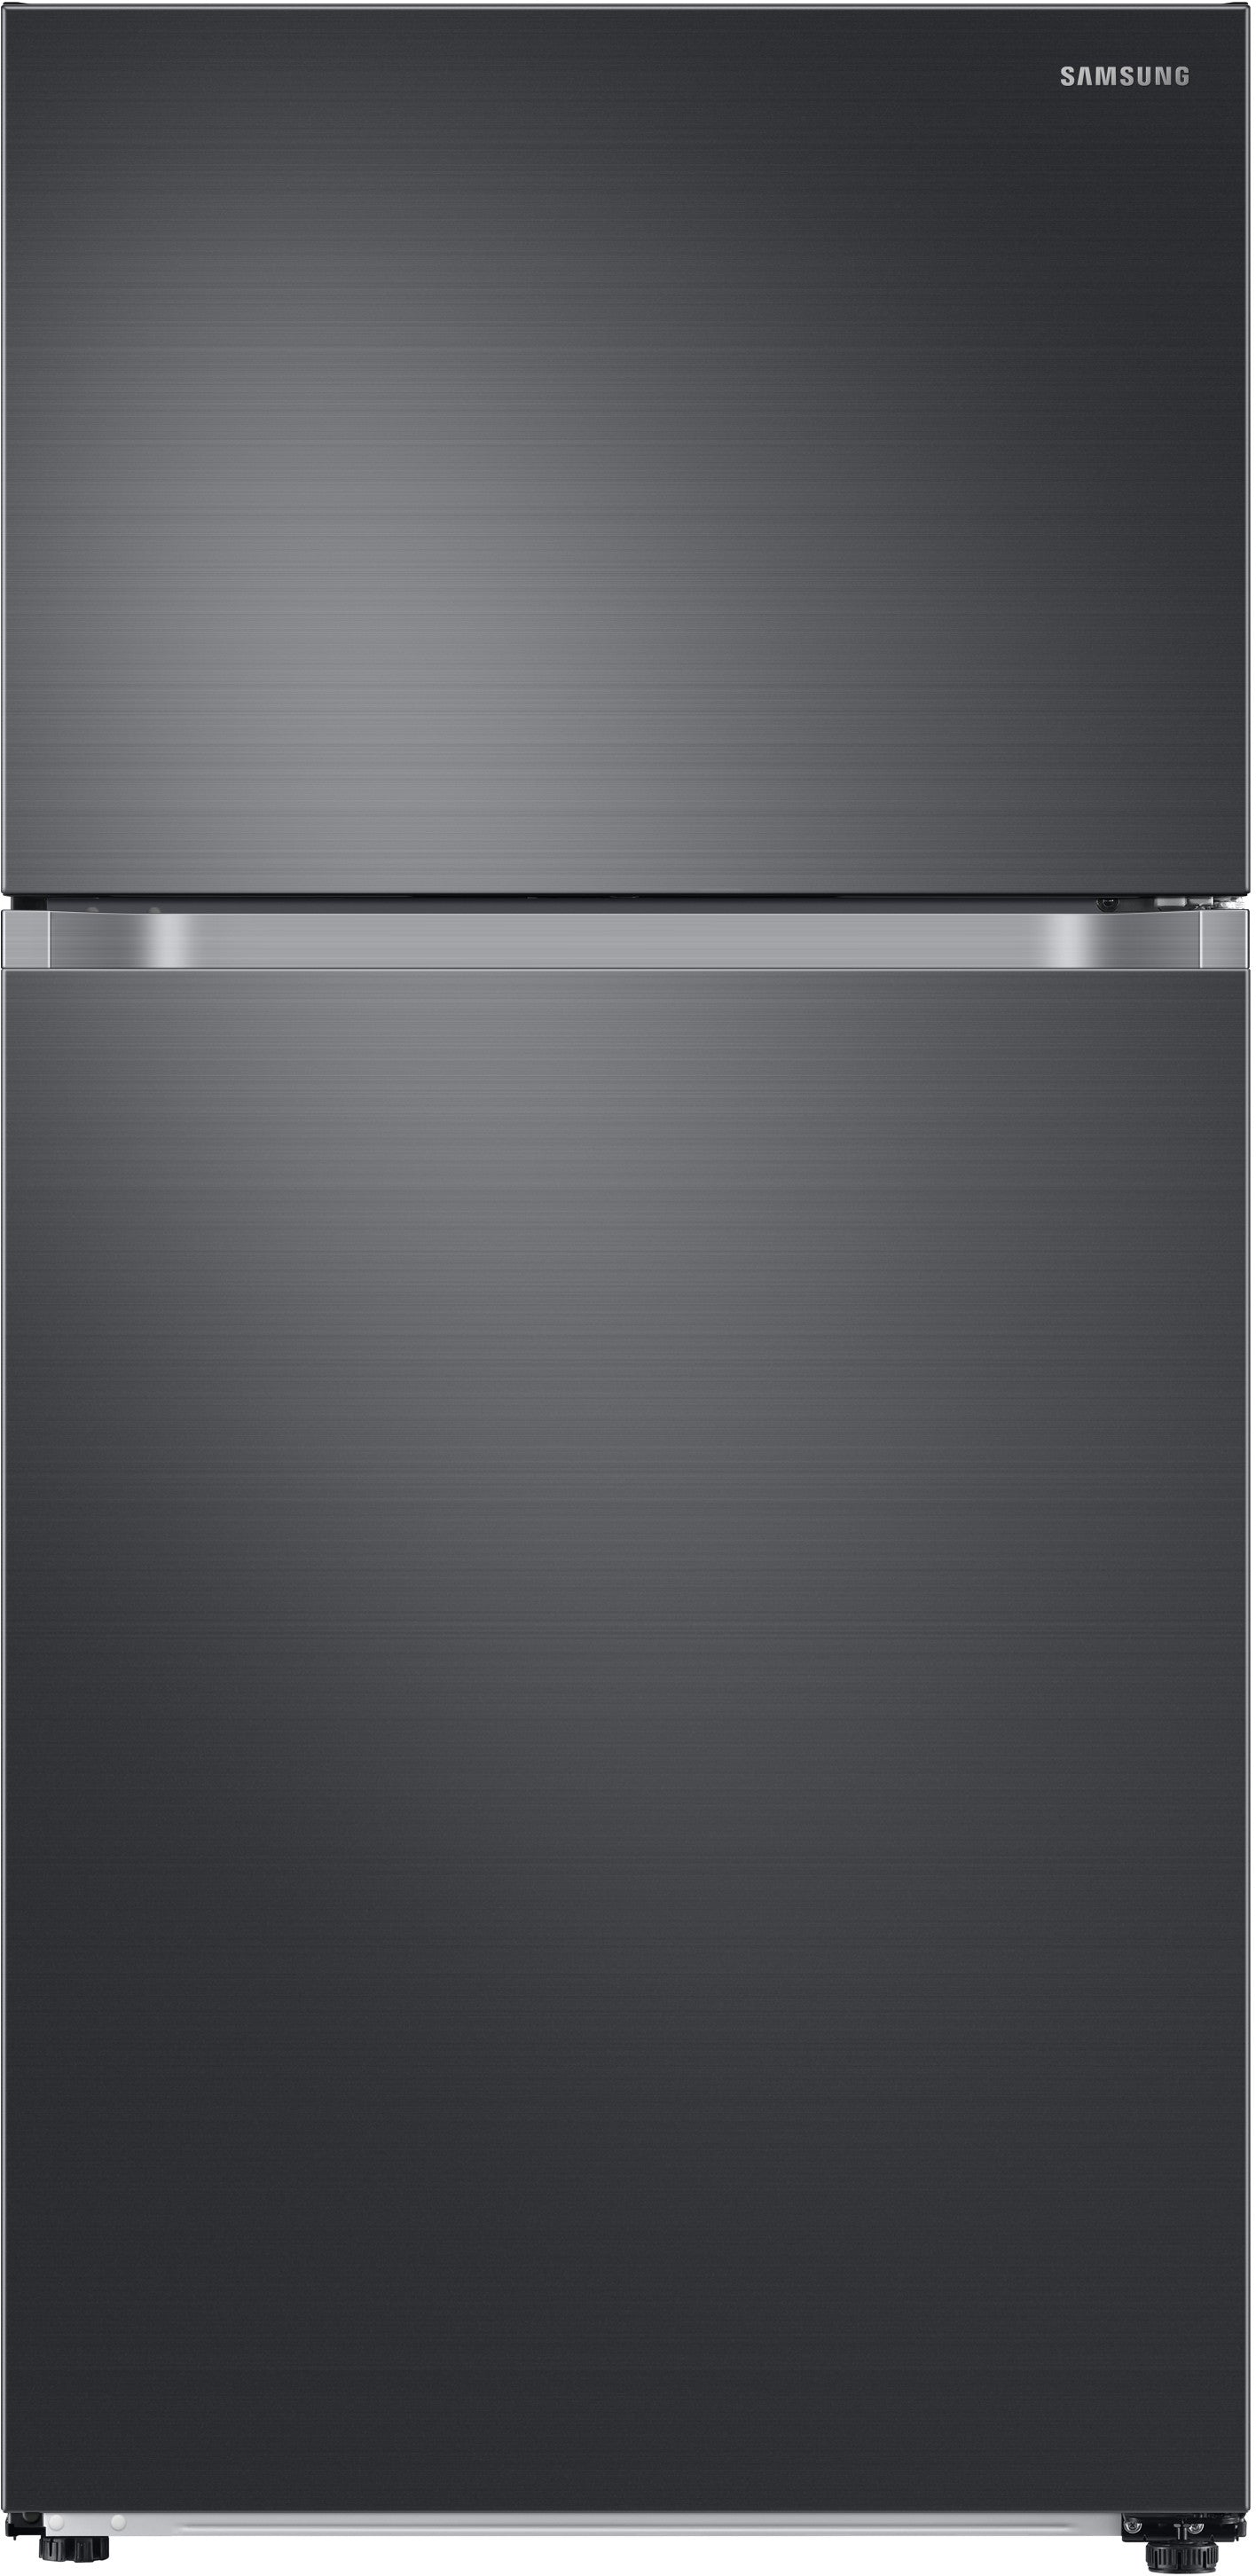 Samsung RT21M6215SG/AA 21.1 Cu. Ft. Top-freezer Refrigerator - Samsung Parts USA